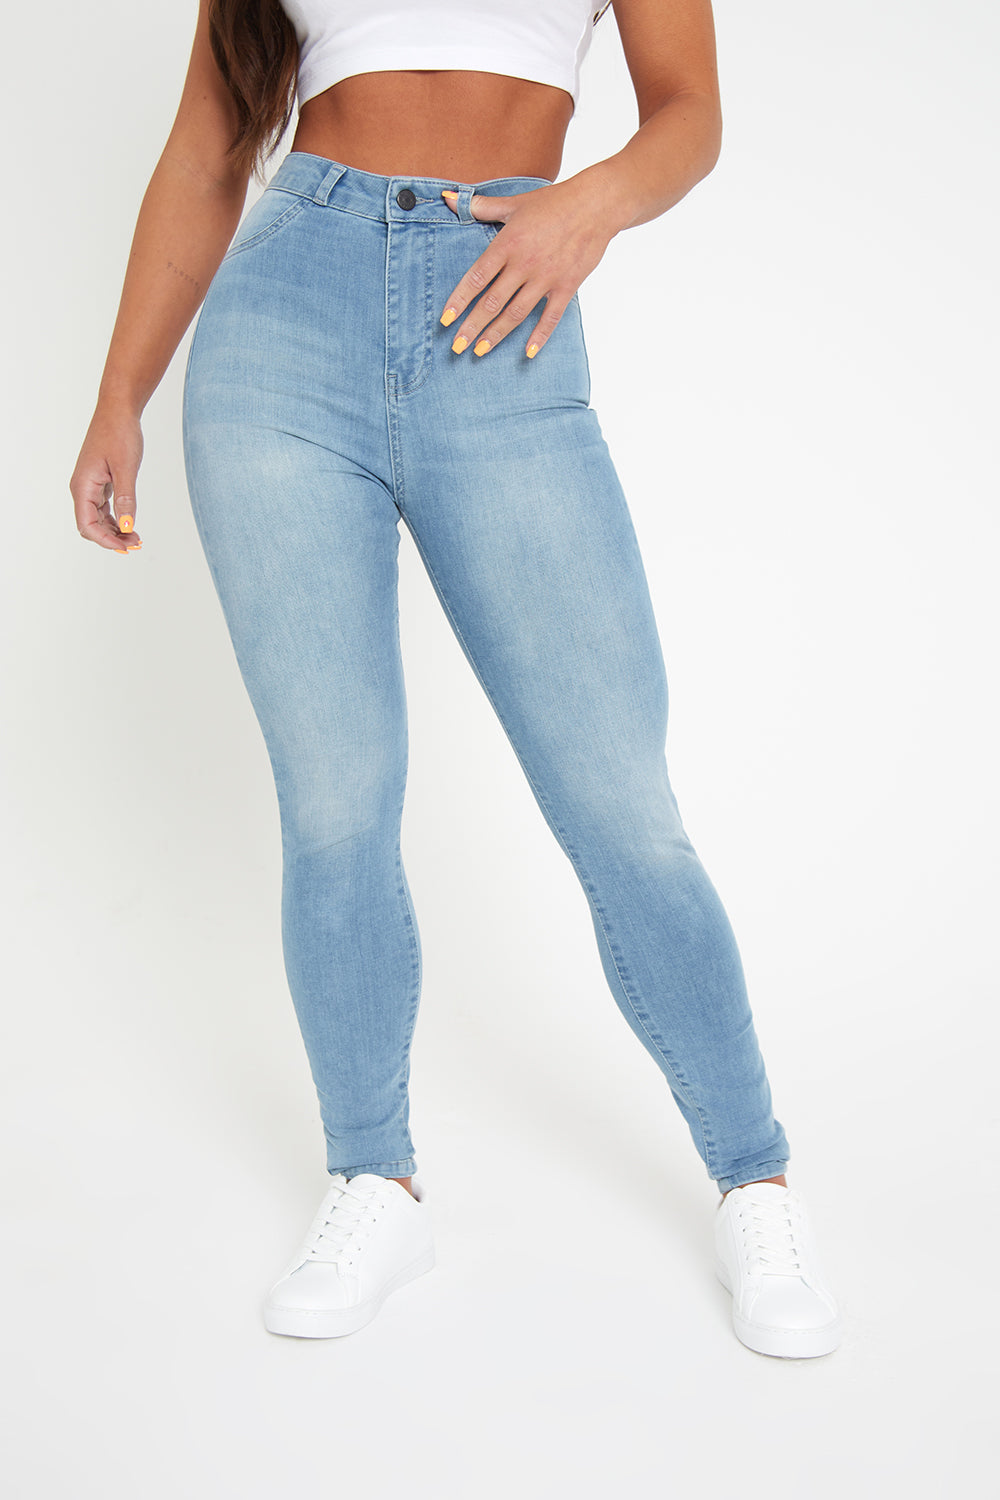 Buy HIGH STAR Blue Slim Fit Regular Length Denim Womens Jeans | Shoppers  Stop